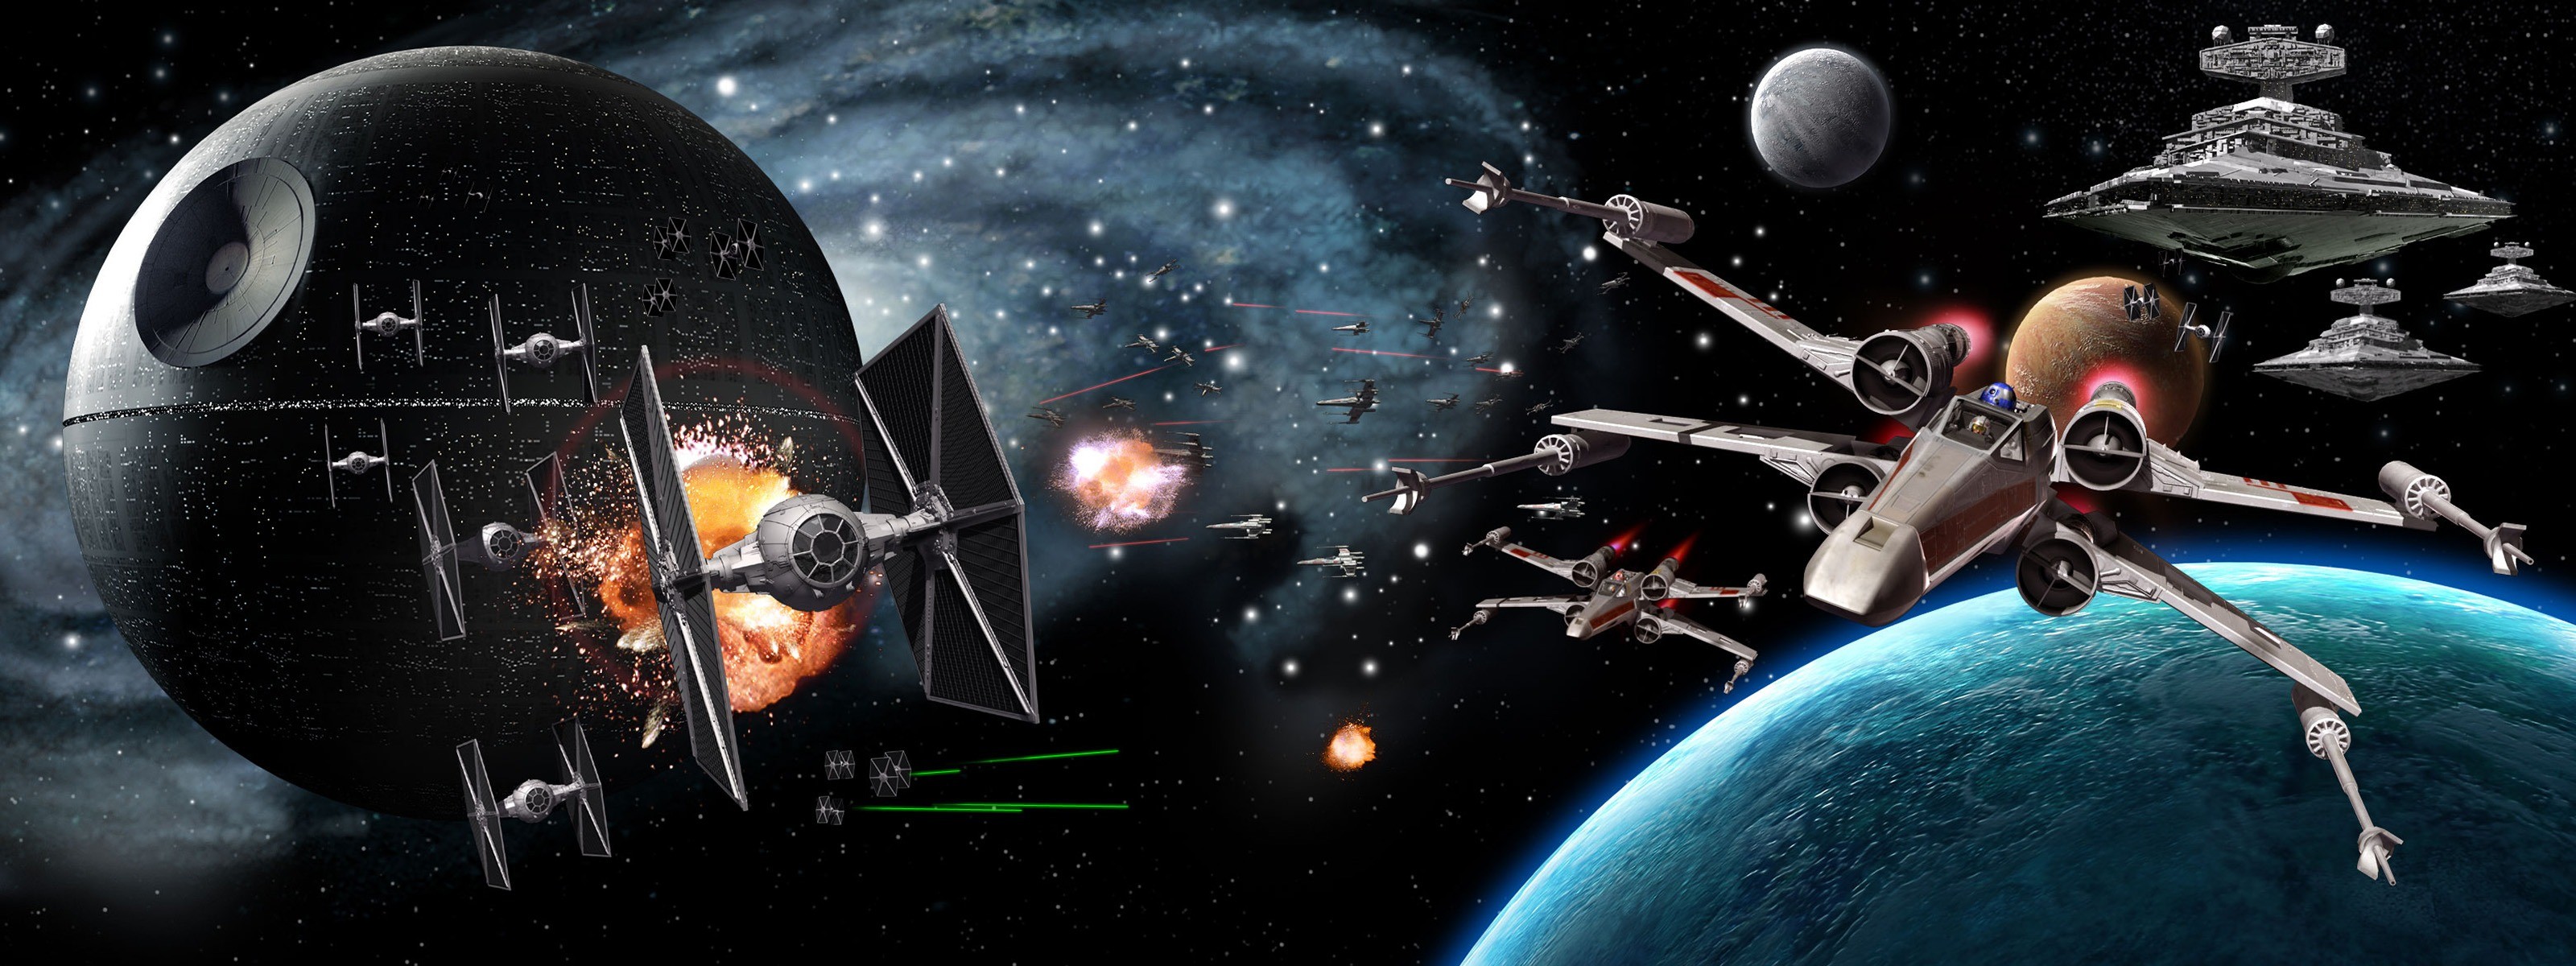 General 3200x1200 Star Wars Imperial Forces Star Wars Ships science fiction fan art digital art X-wing Star Destroyer Death Star TIE Fighter